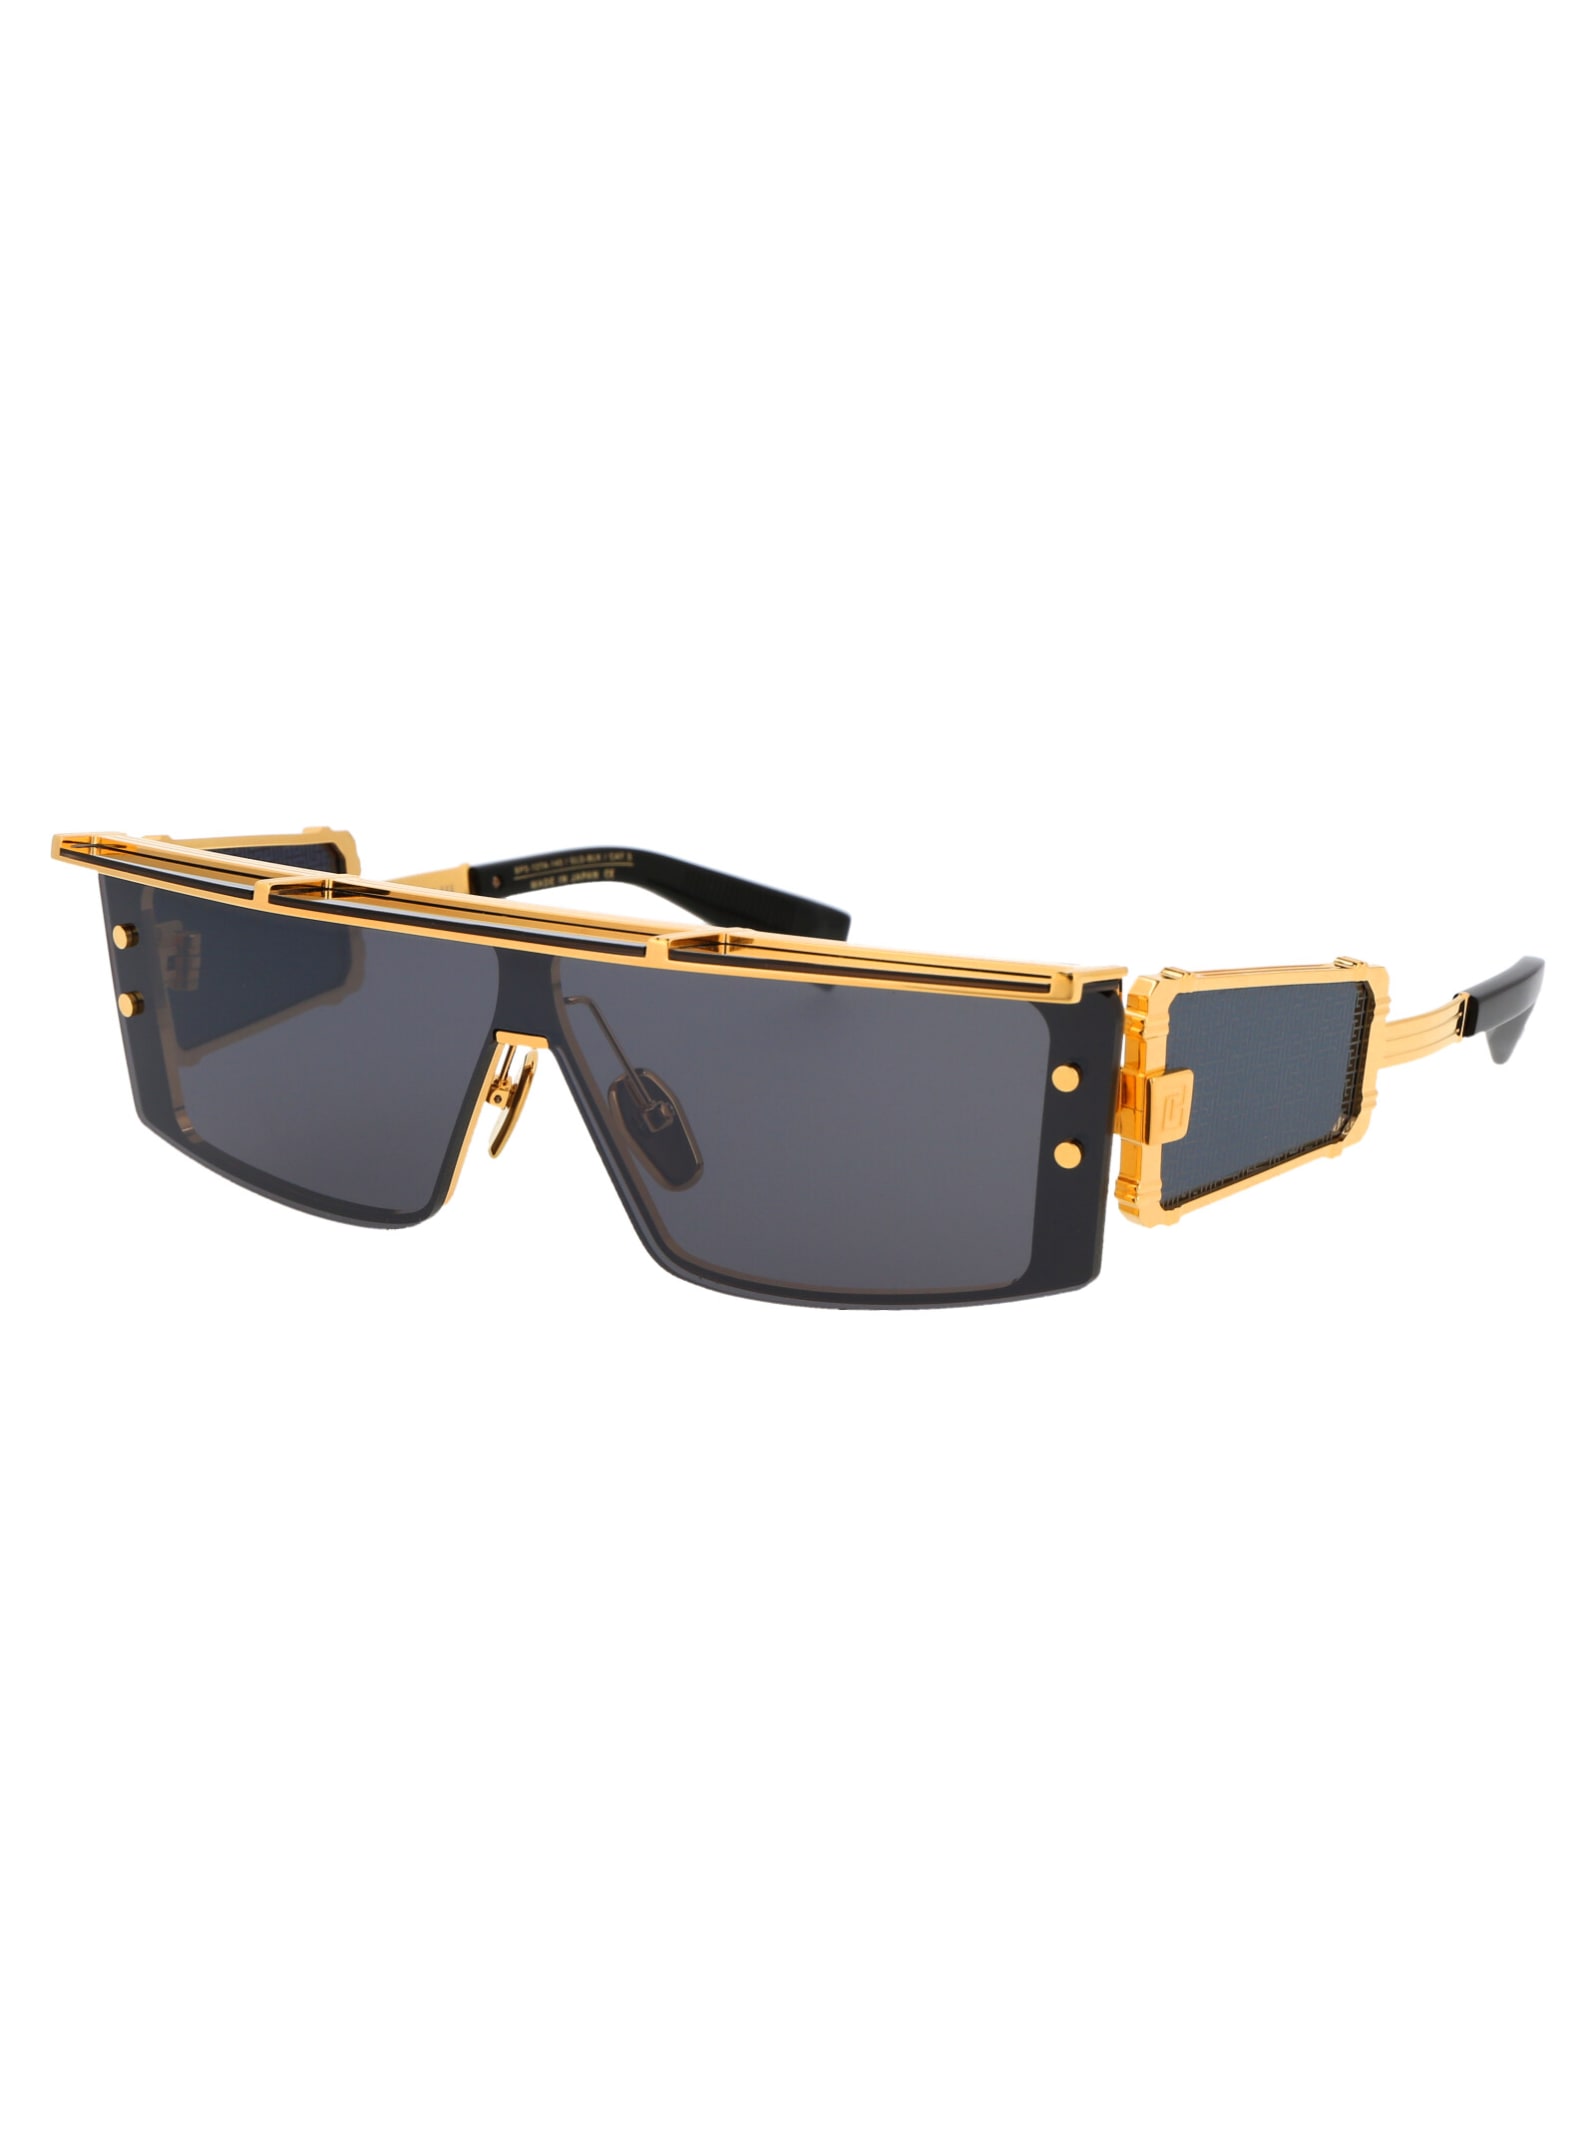 Shop Balmain Wonder Boy Iii Sunglasses In Gold - Black W/ Dark Grey Shield